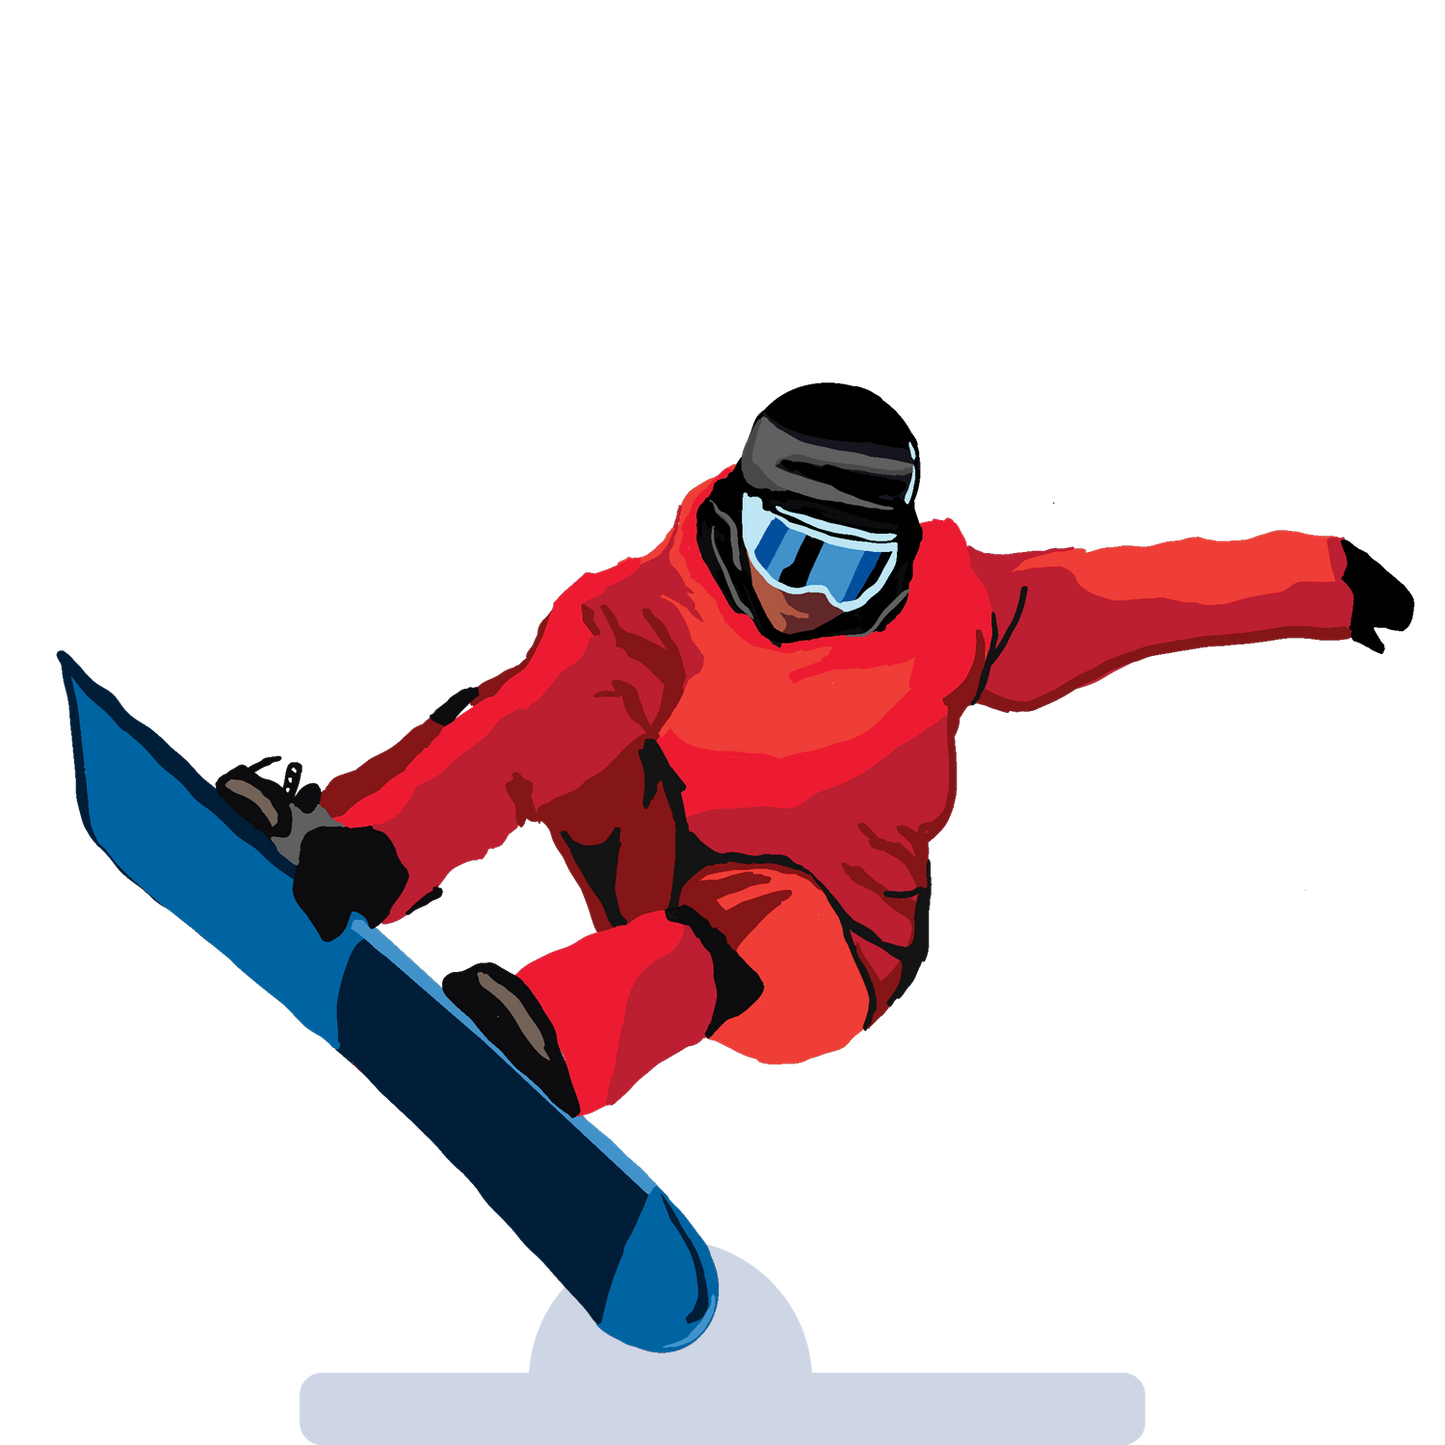 Male snowboarder